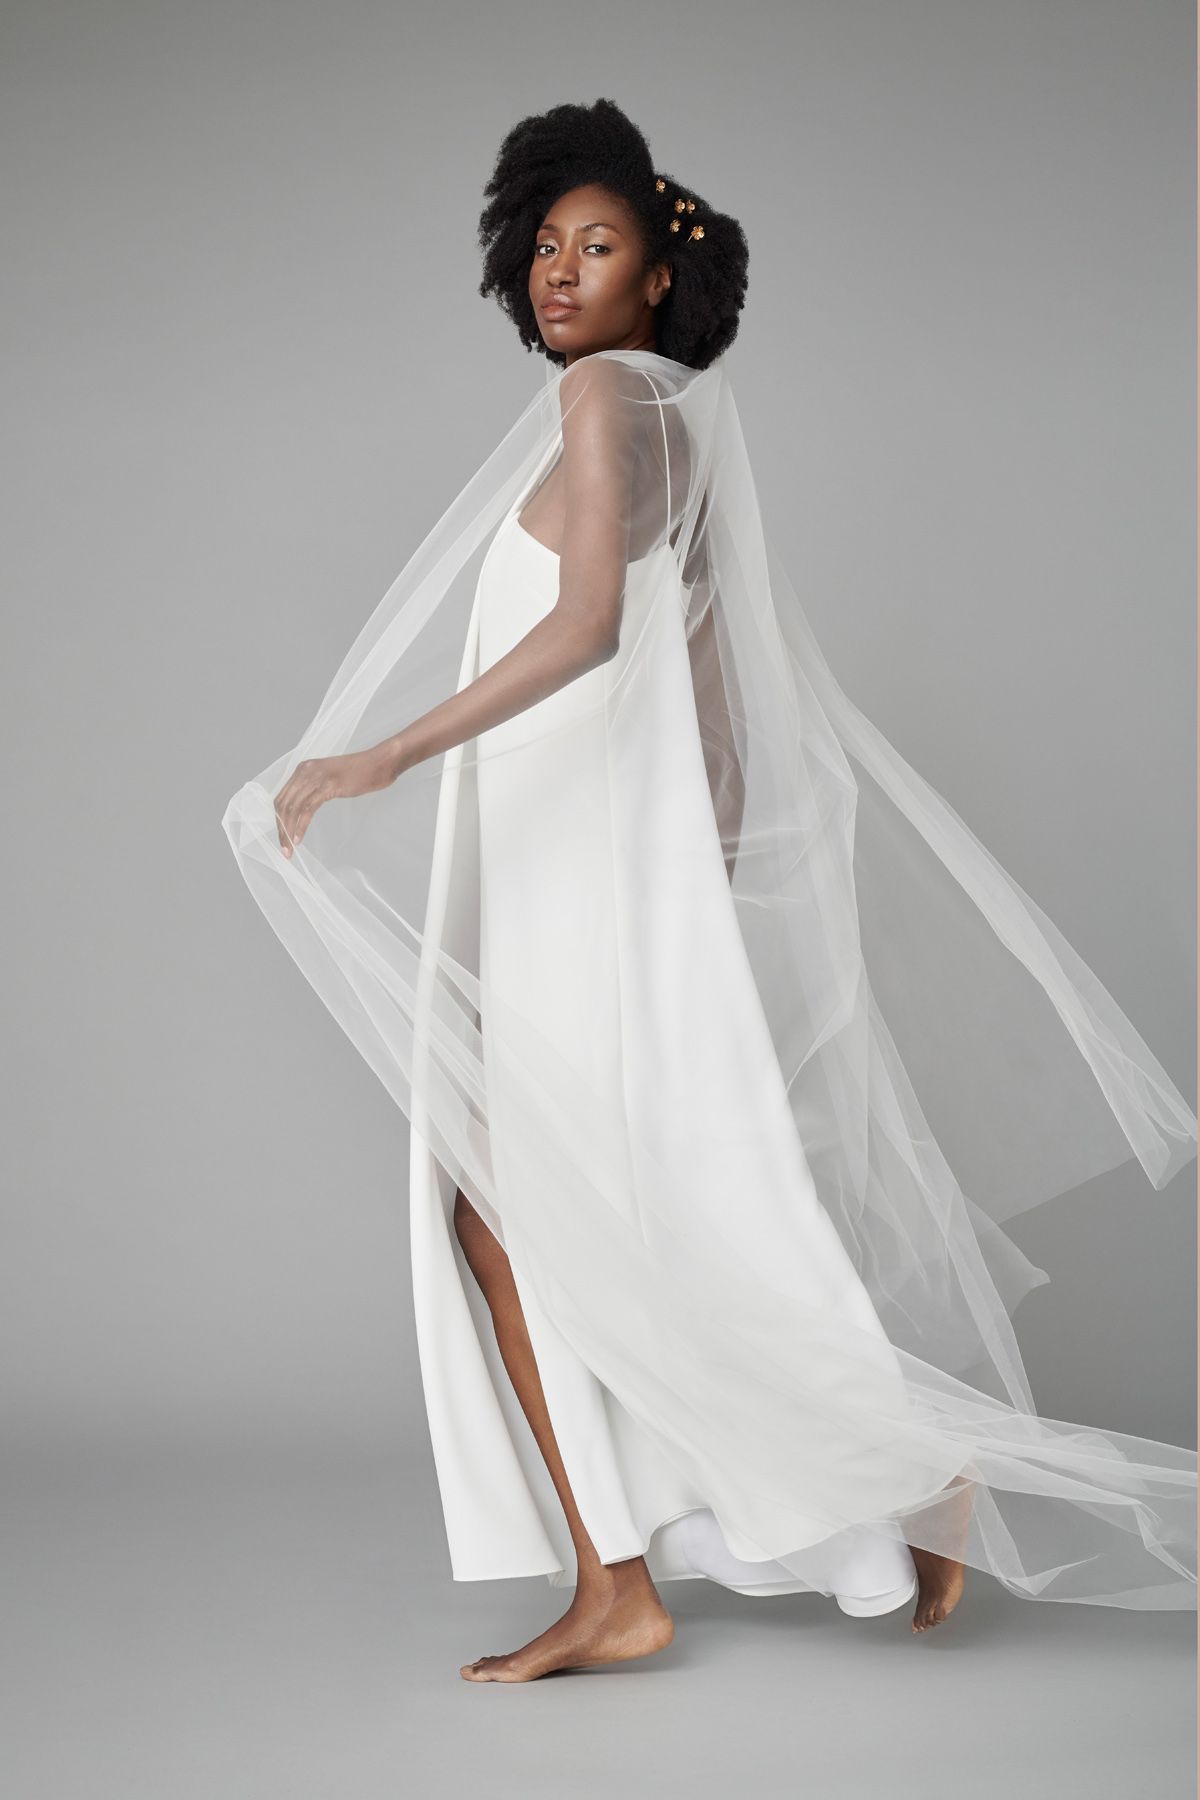 Black model in Rita Colson wedding dress